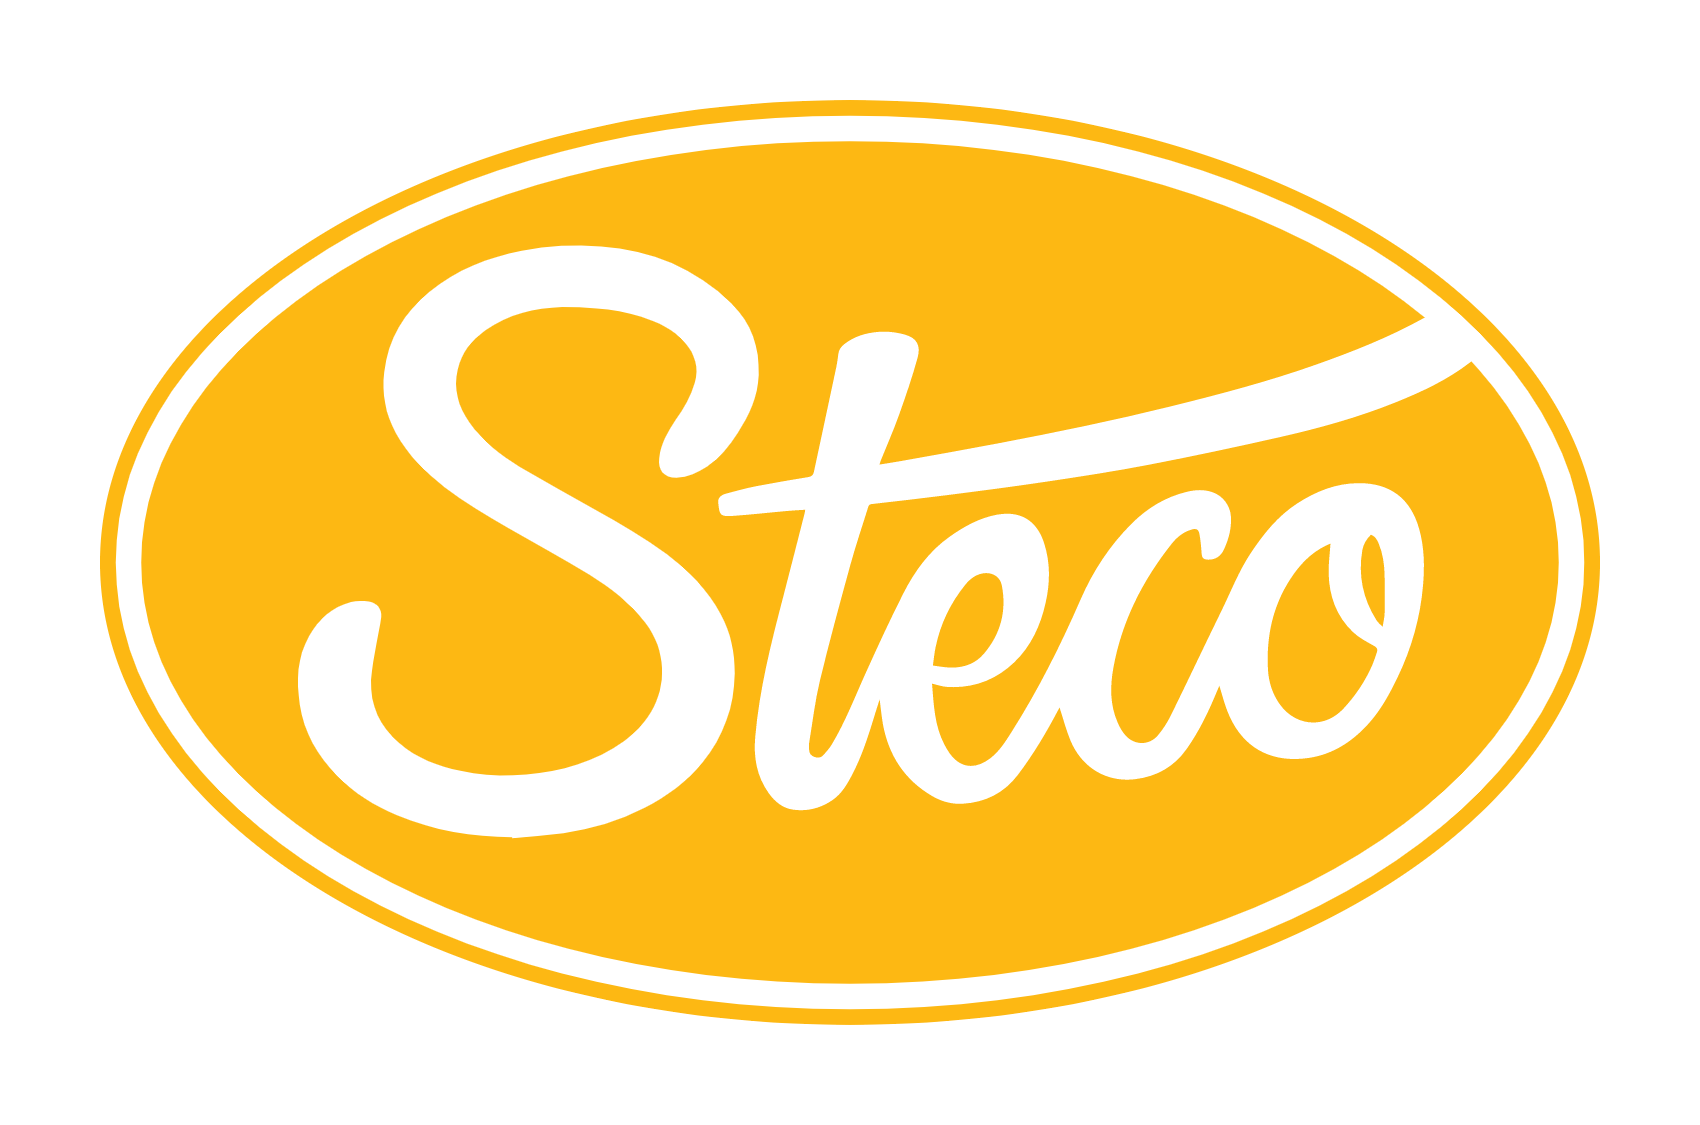 Steco - Steco - Bibia